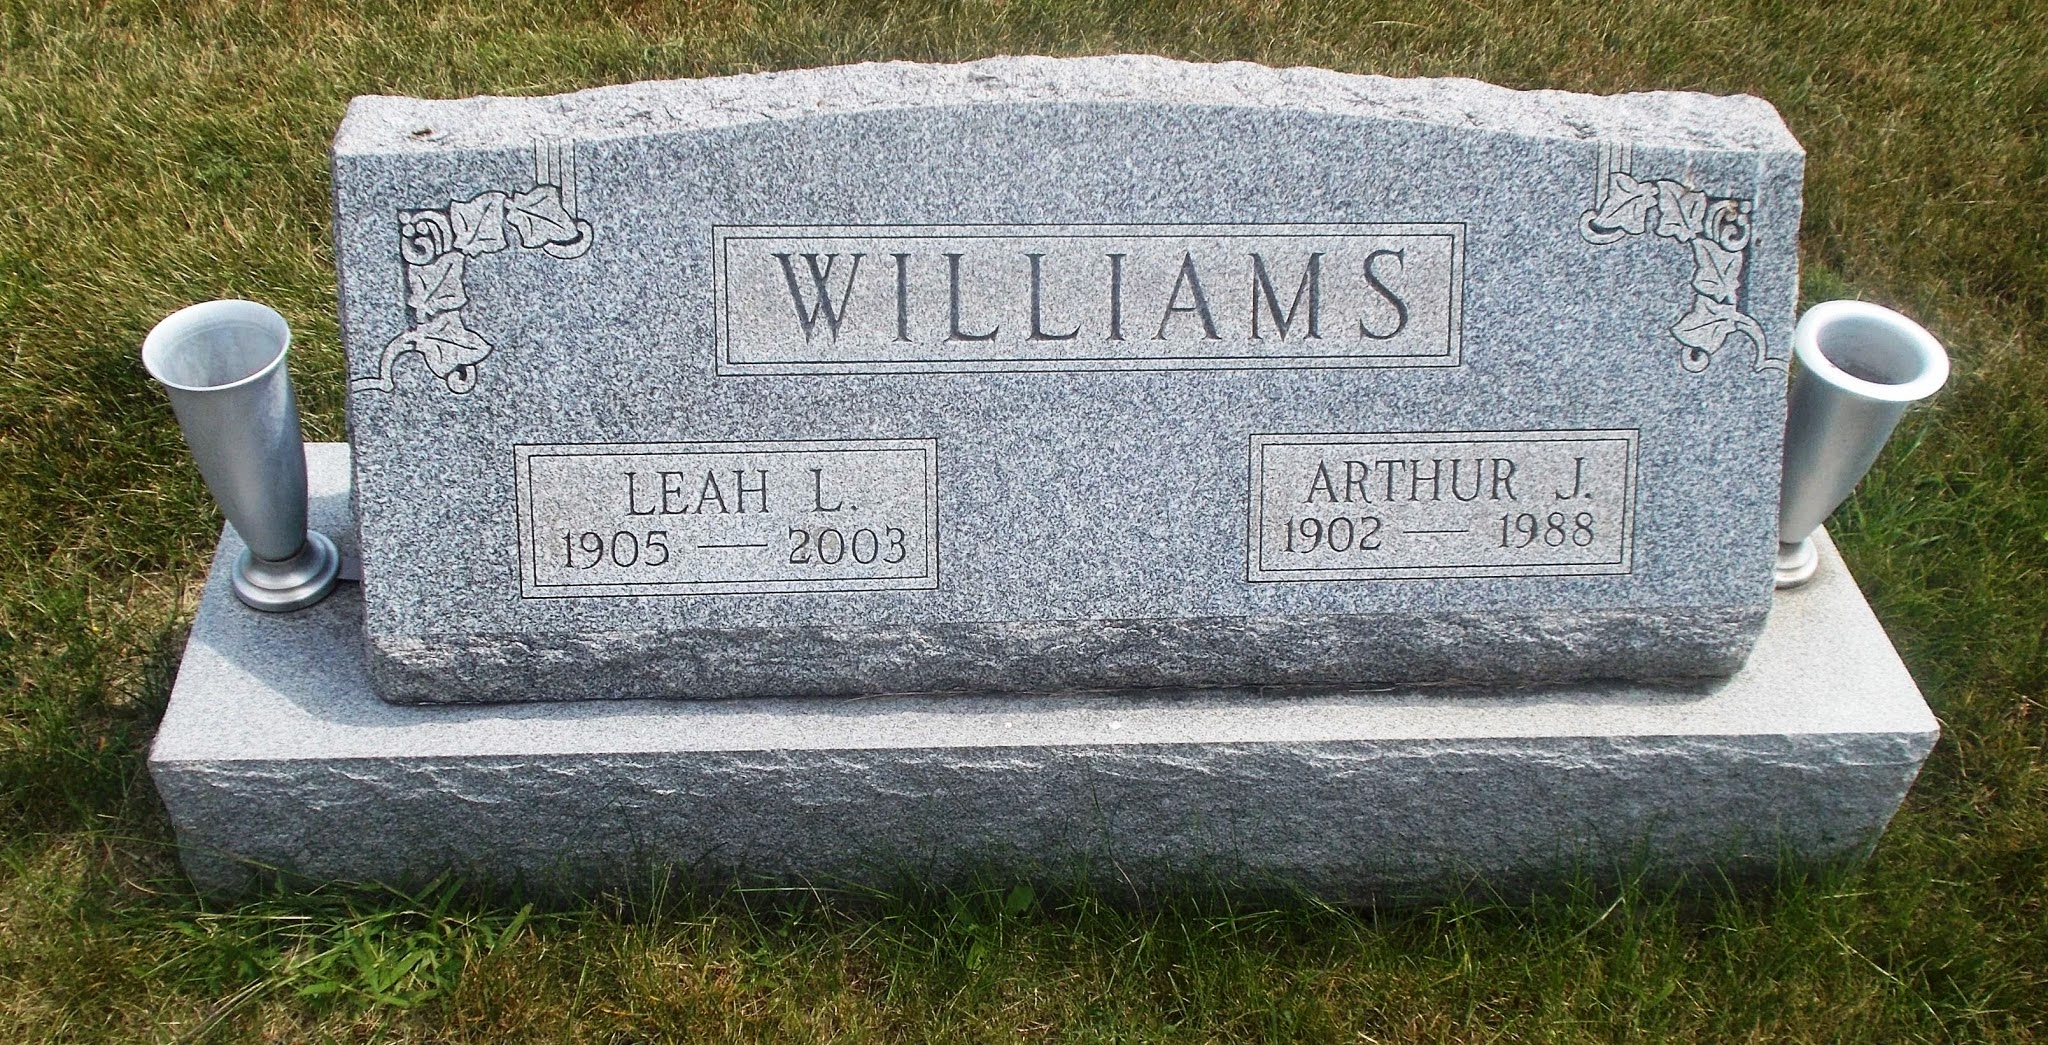 Arthur J Williams